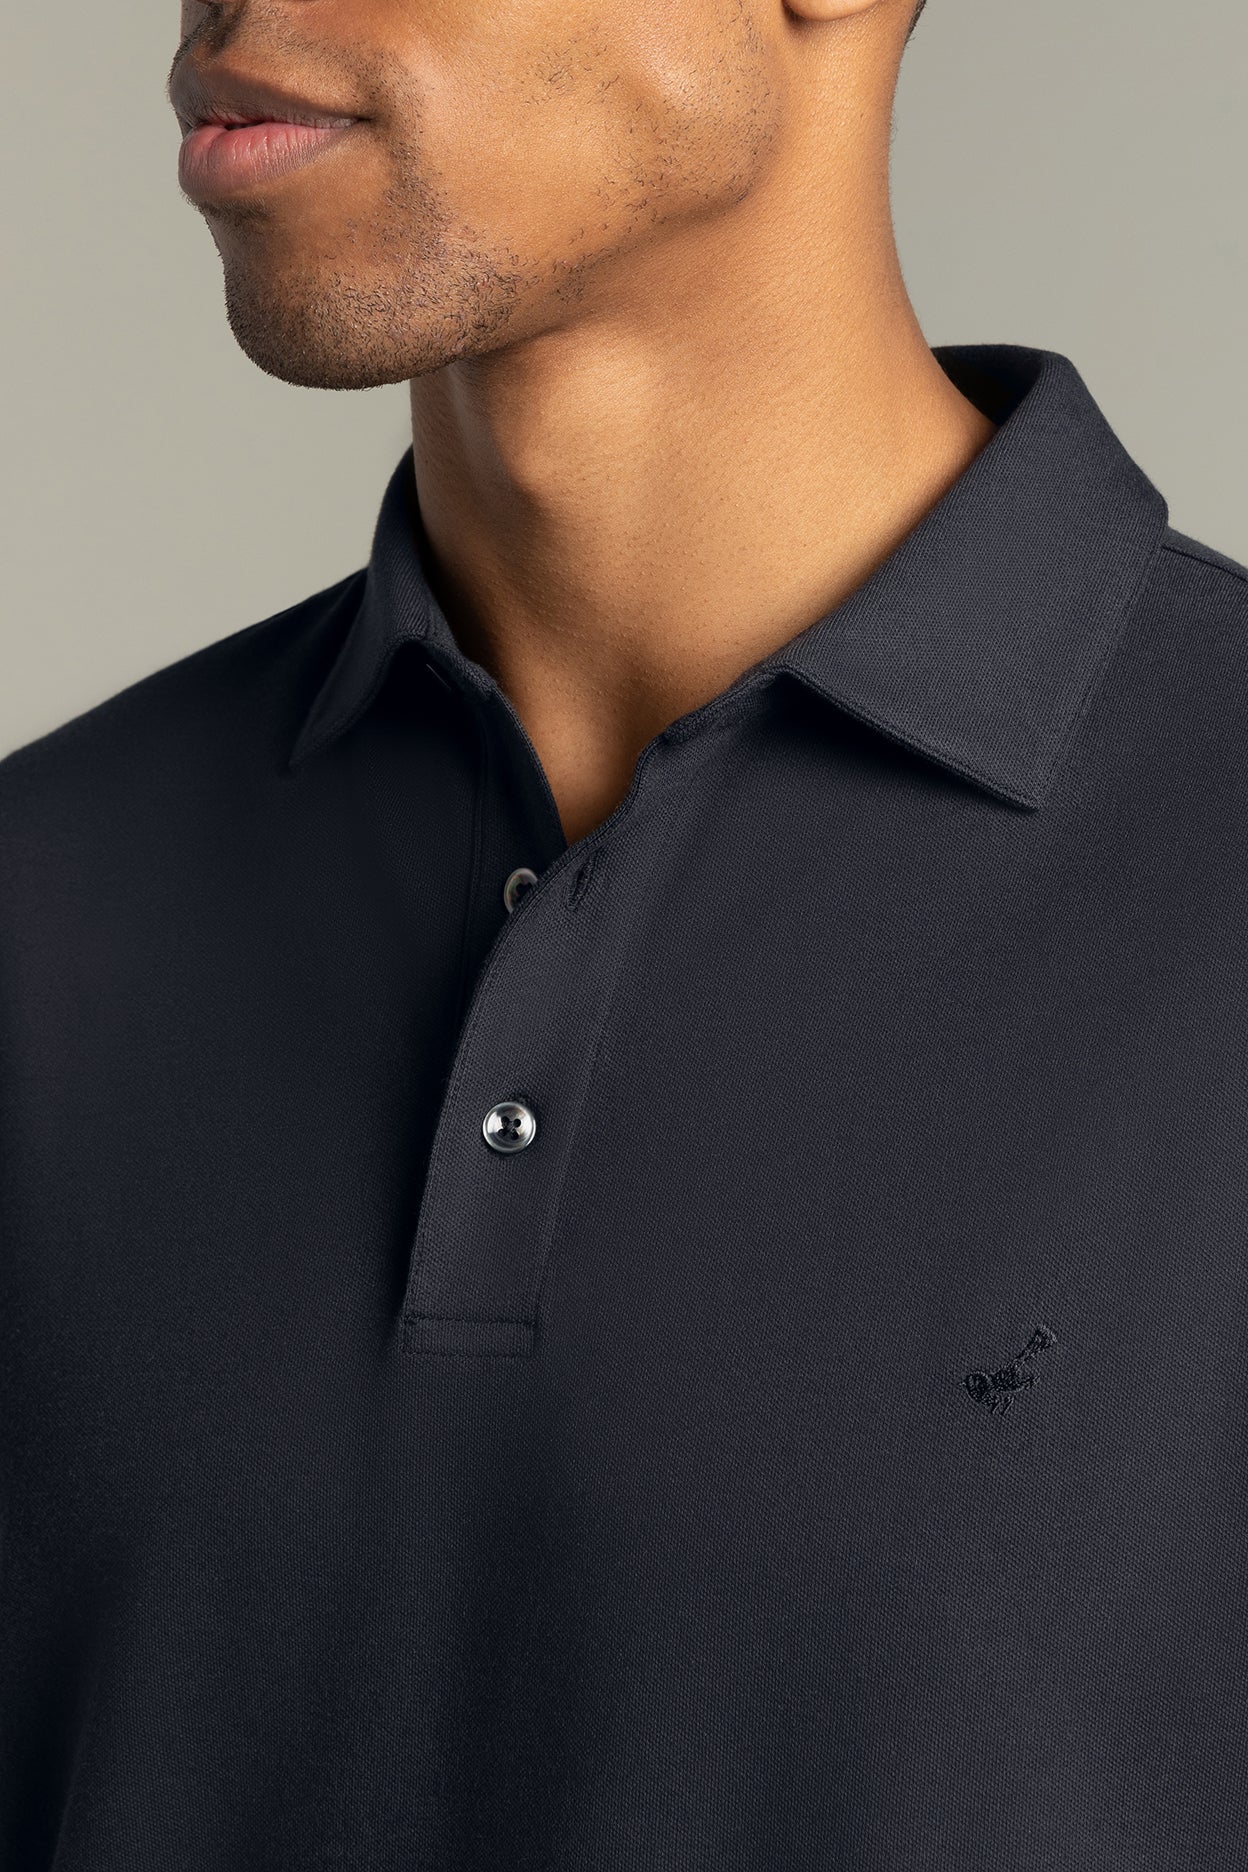 Burberry premium polo shirt hot 2023, polo shirt for men in 2023